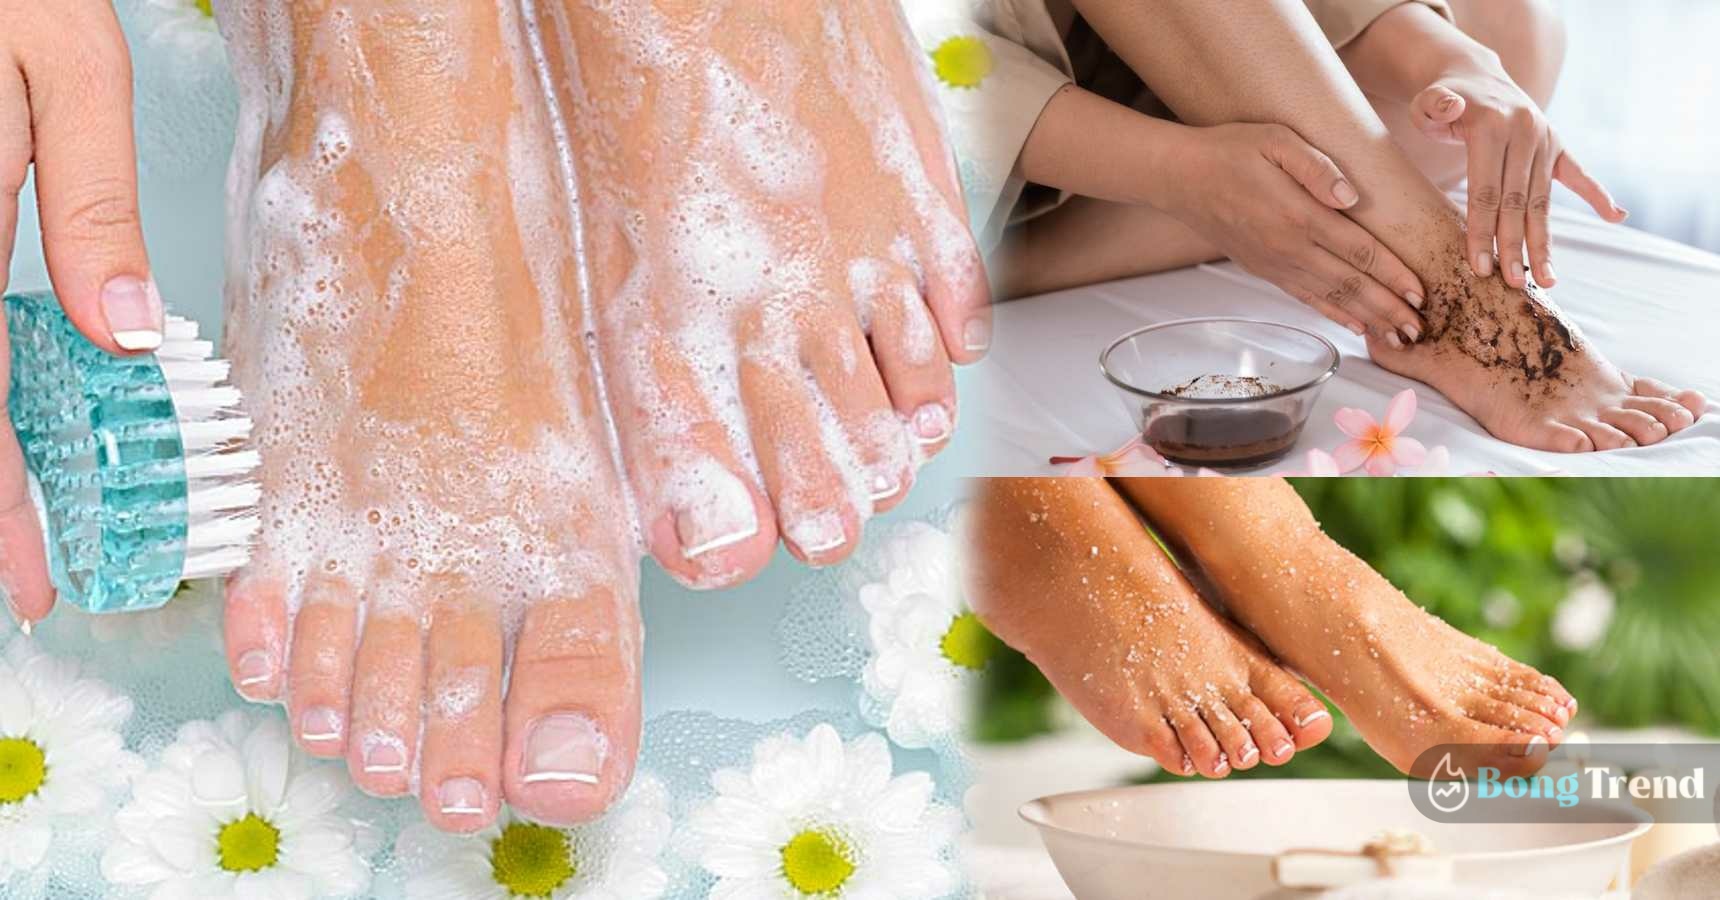 Feet care in Winter Season Homemade tips